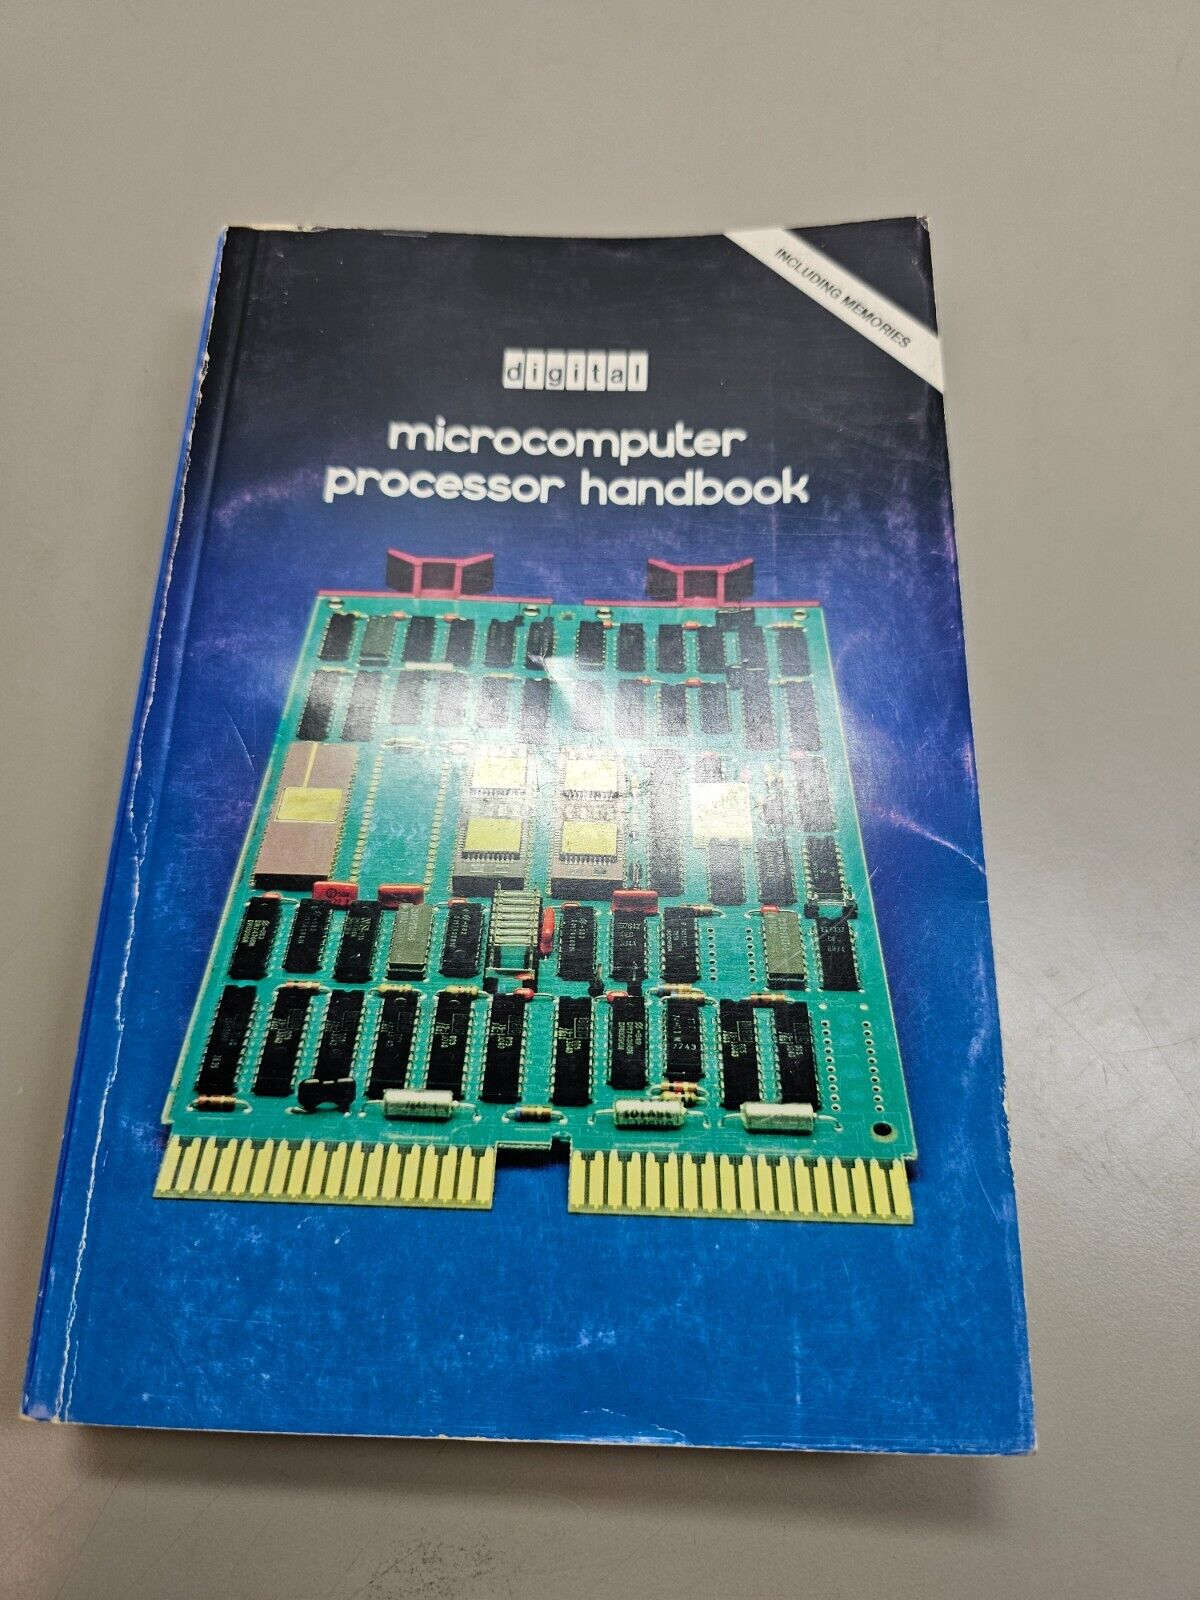 1980 DEC Digital Equipment Corporation Microcomputer Interfaces Handbook